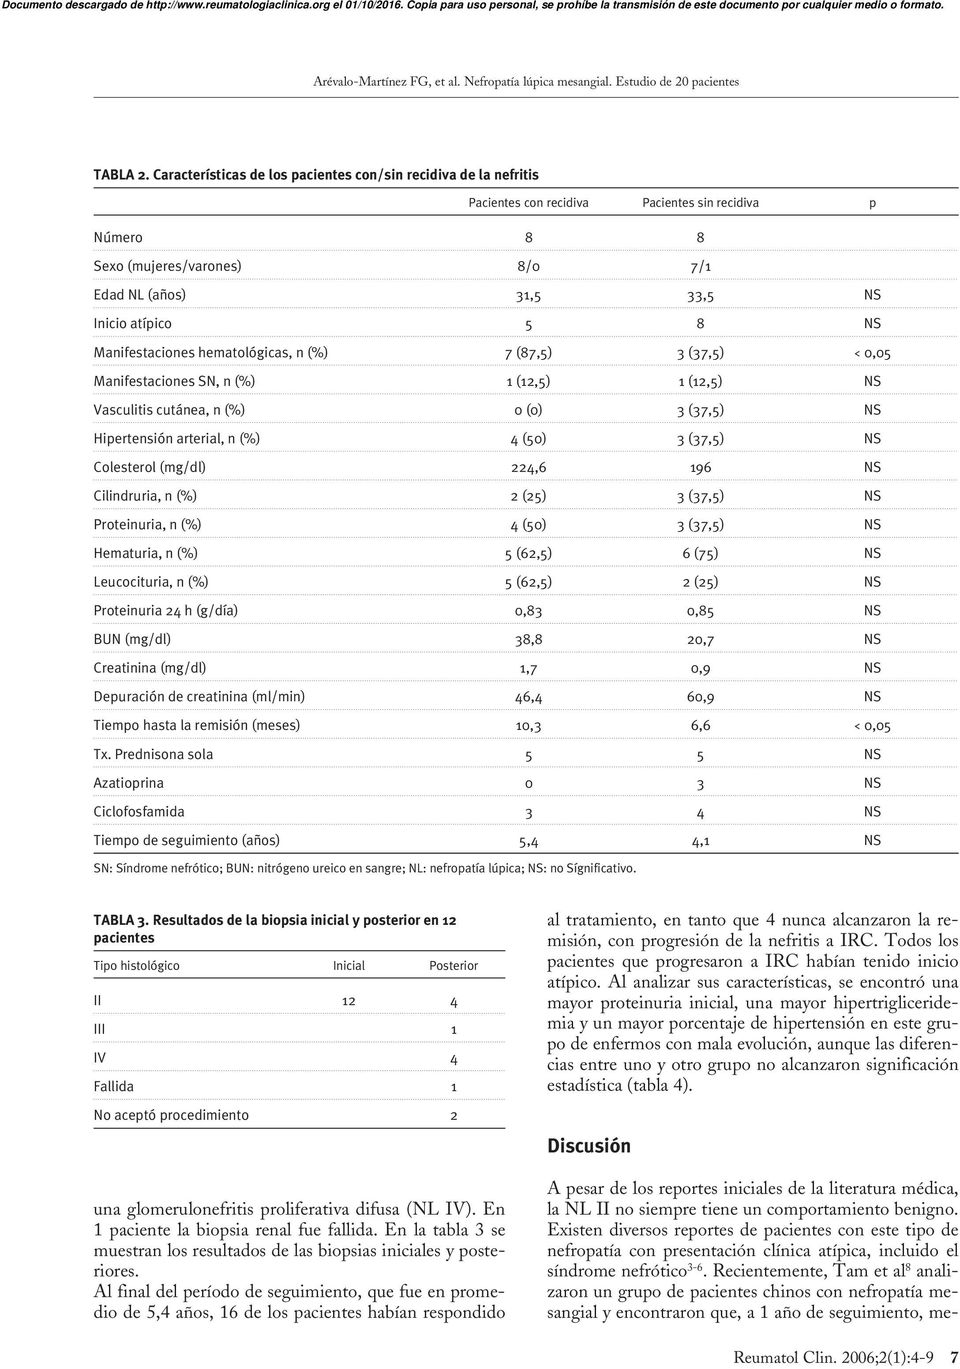 8 NS Manifestaciones hematológicas, n (%) 7 (87,5) 3 (37,5) < 0,05 Manifestaciones SN, n (%) 1 (12,5) 1 (12,5) NS Vasculitis cutánea, n (%) 0 (0) 3 (37,5) NS Hipertensión arterial, n (%) 4 (50) 3